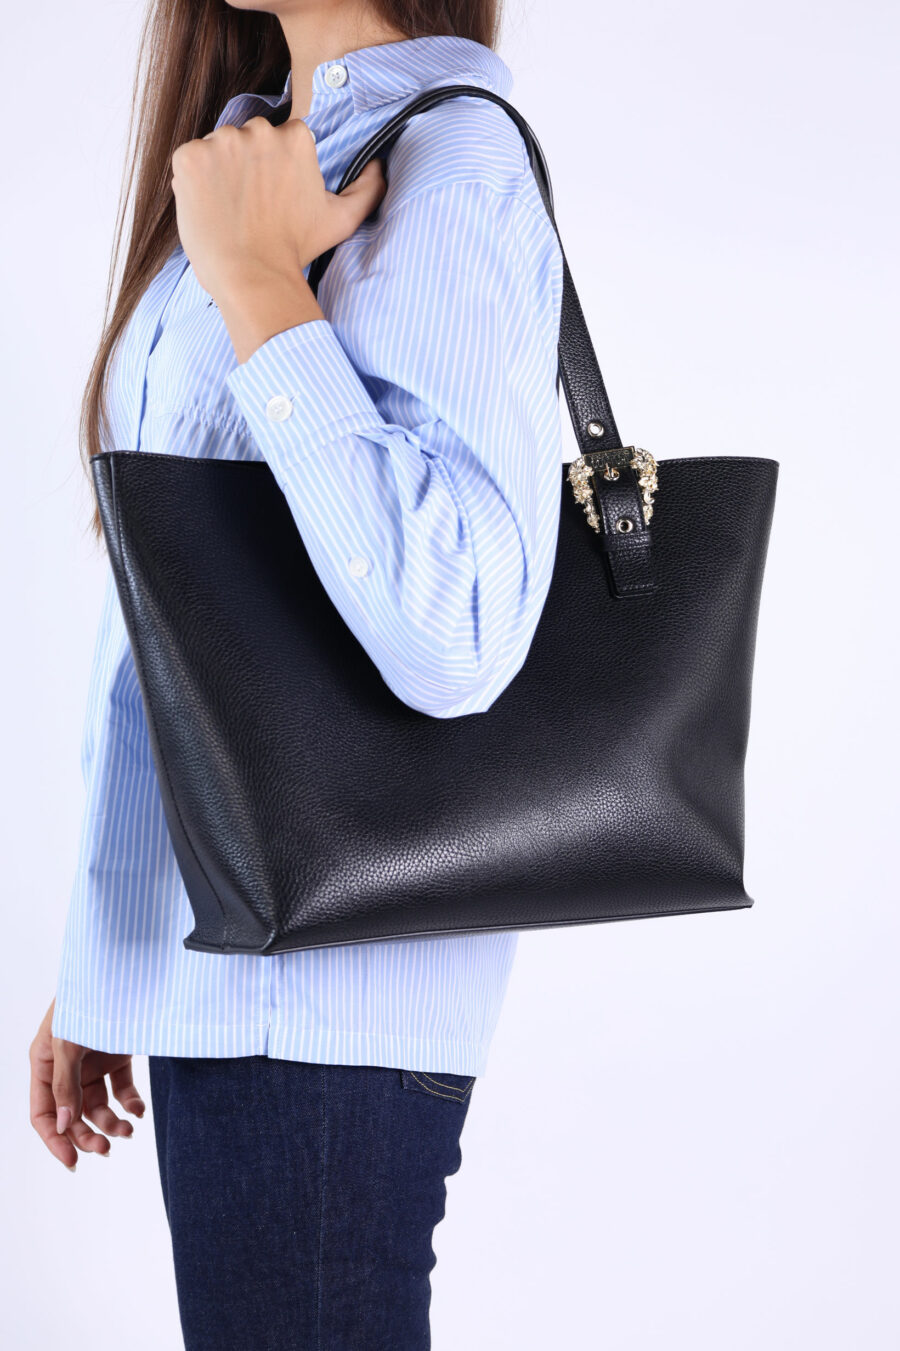 Black shopper bag with baroque buckles - 361223054662201727